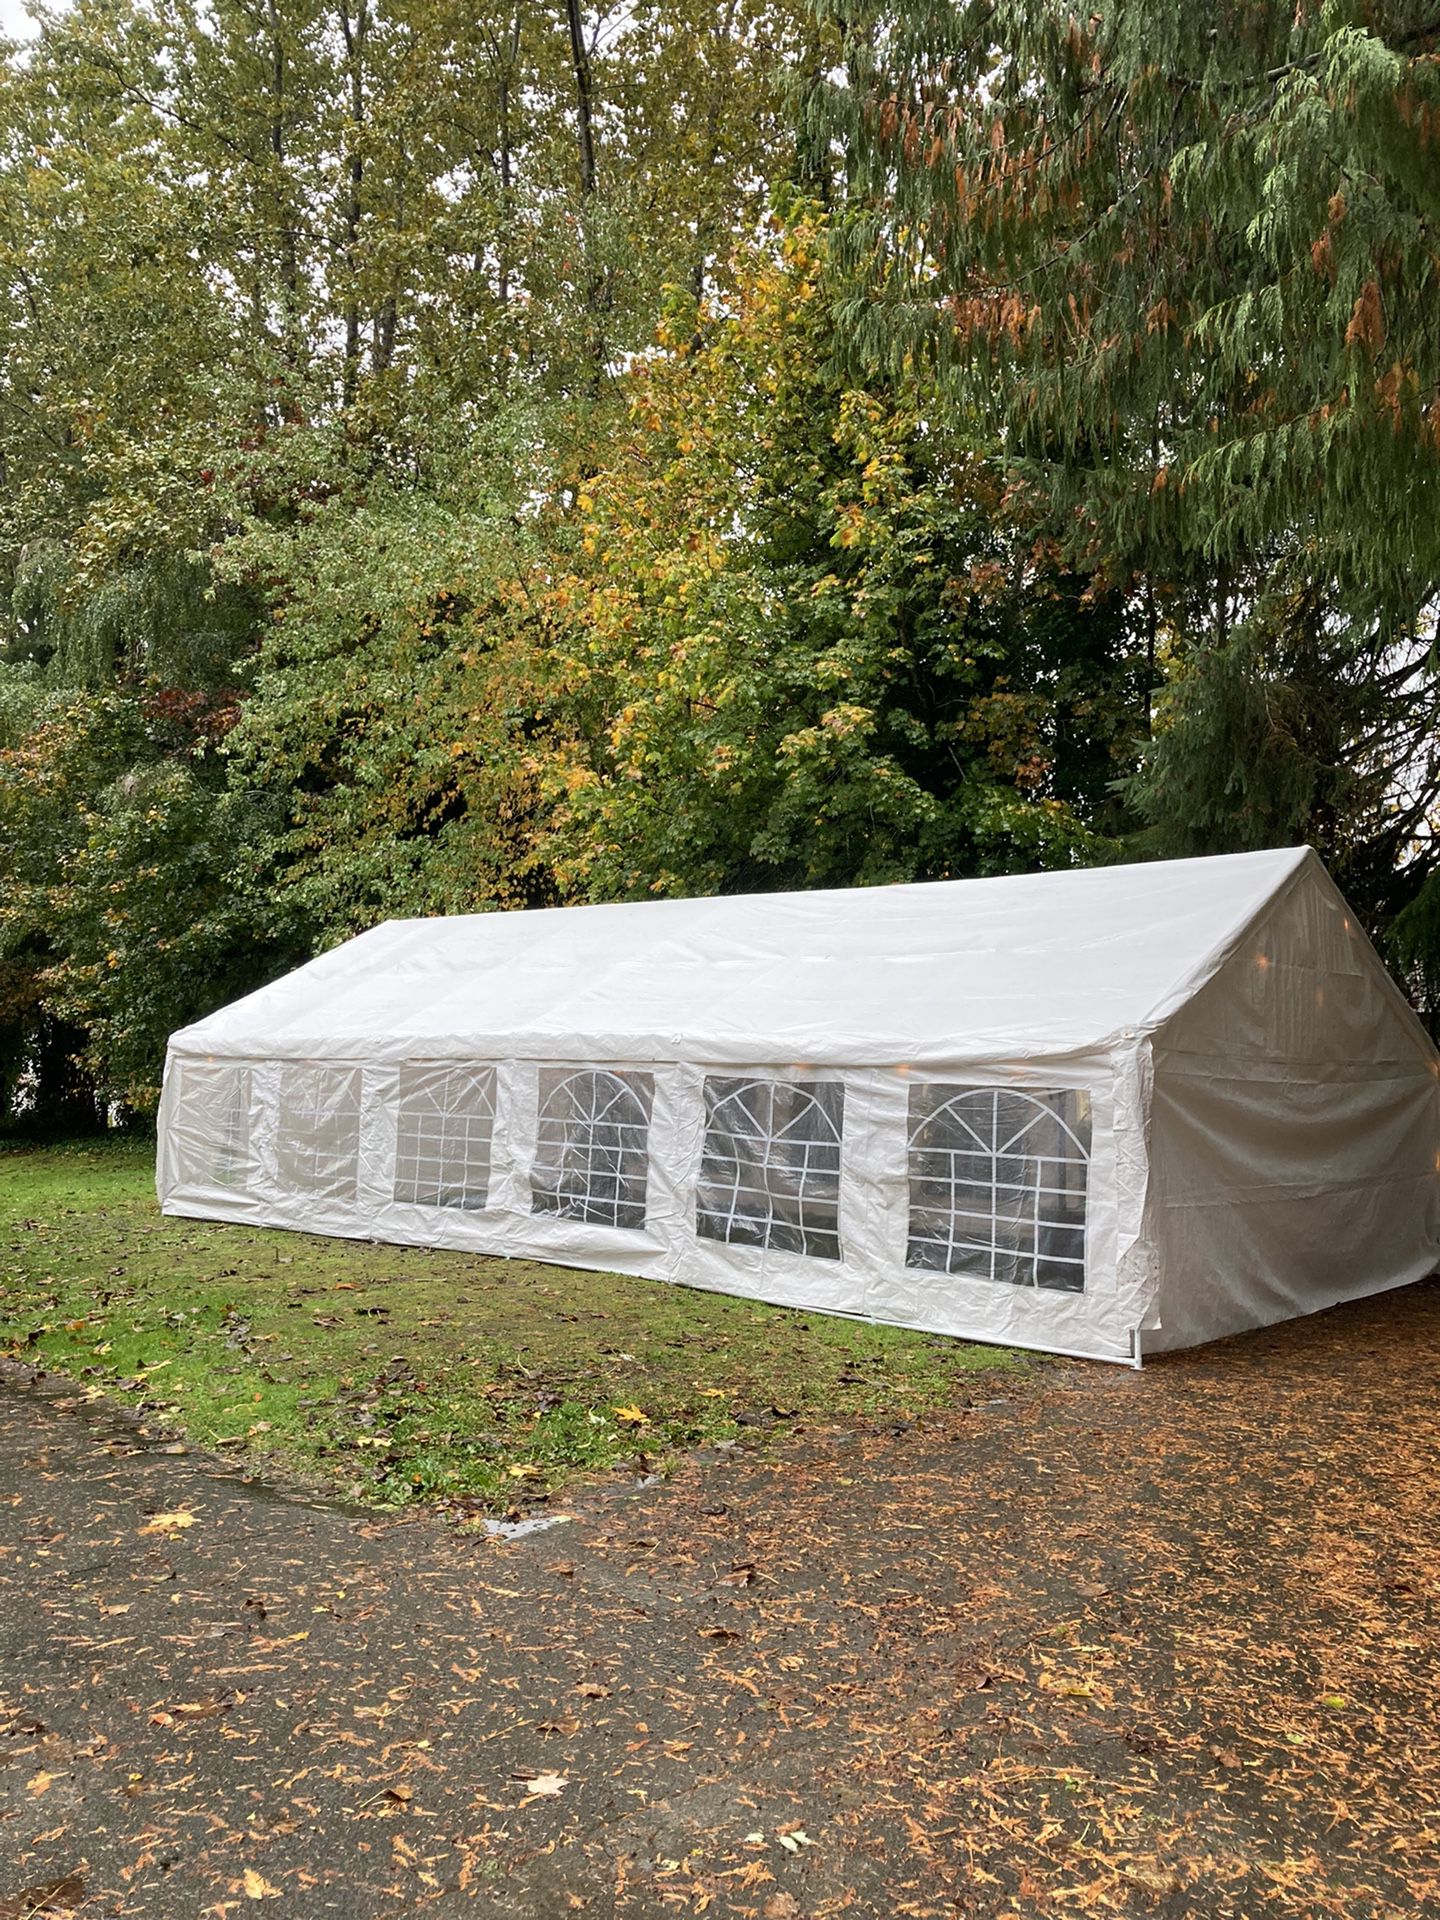 20’ X 40’ Tent $850